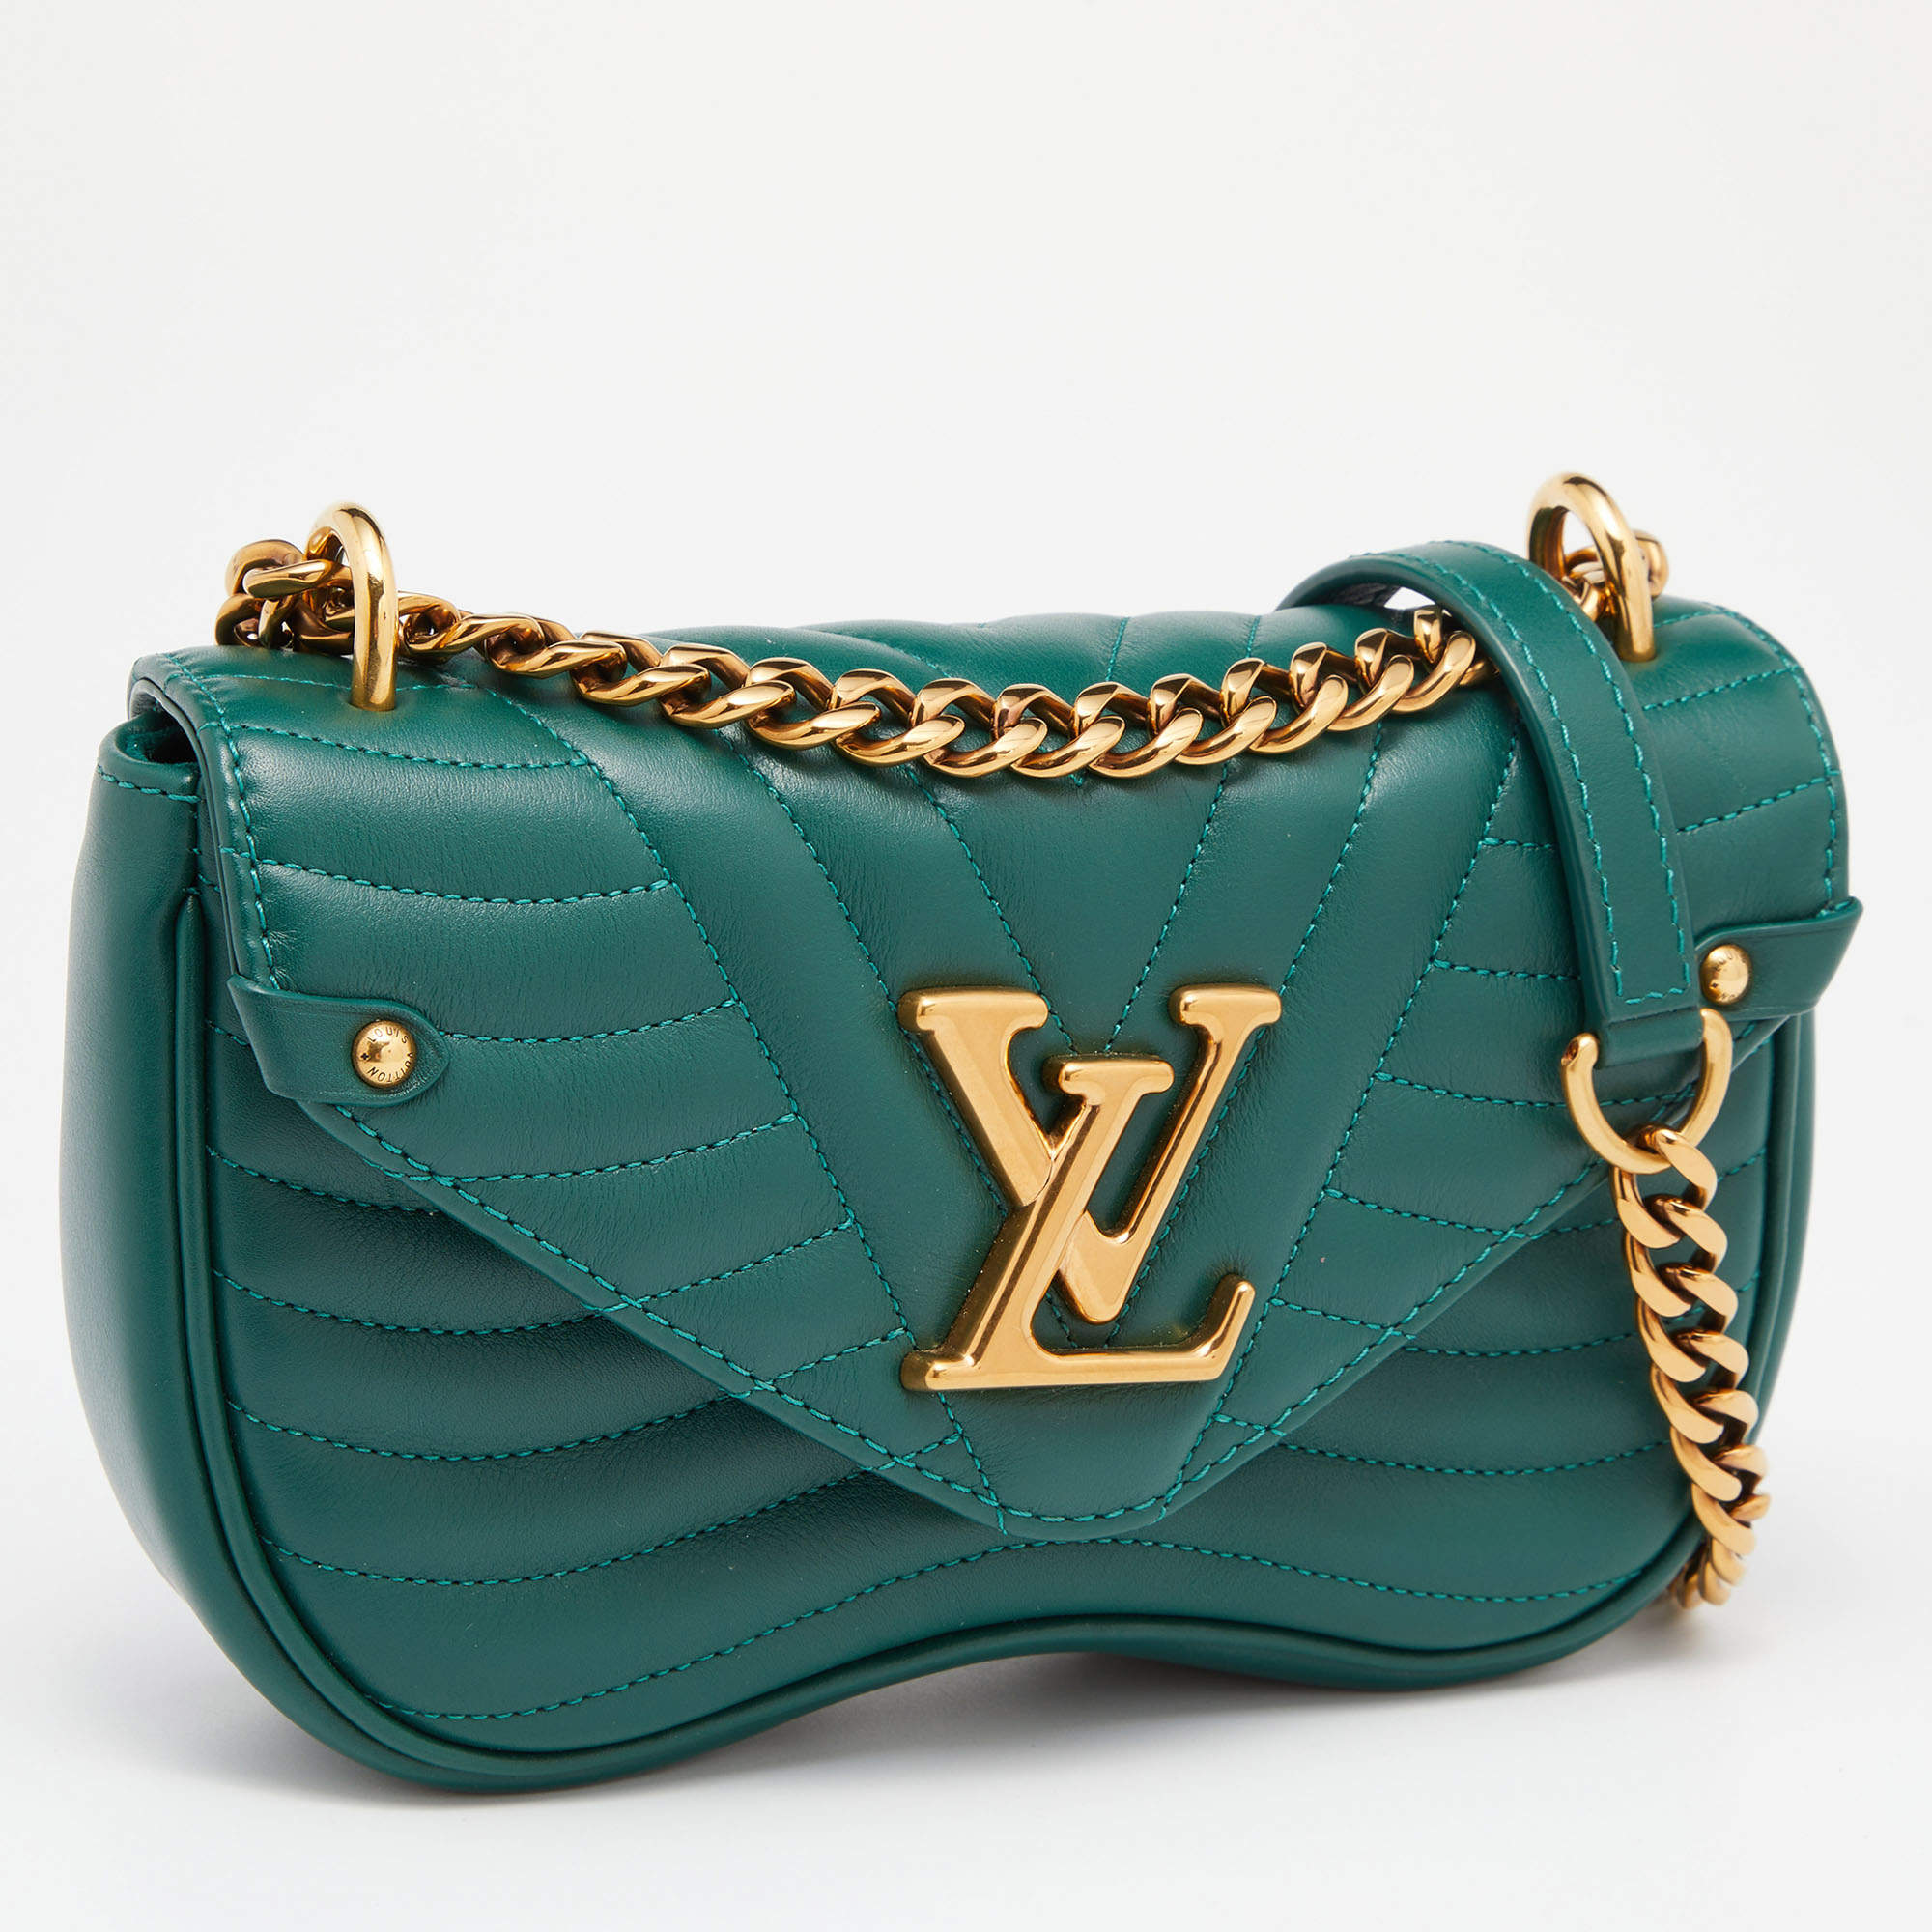 Designer paper shopping bag 10 (Gucci, Cartier, Louis Vuitton, Prada)